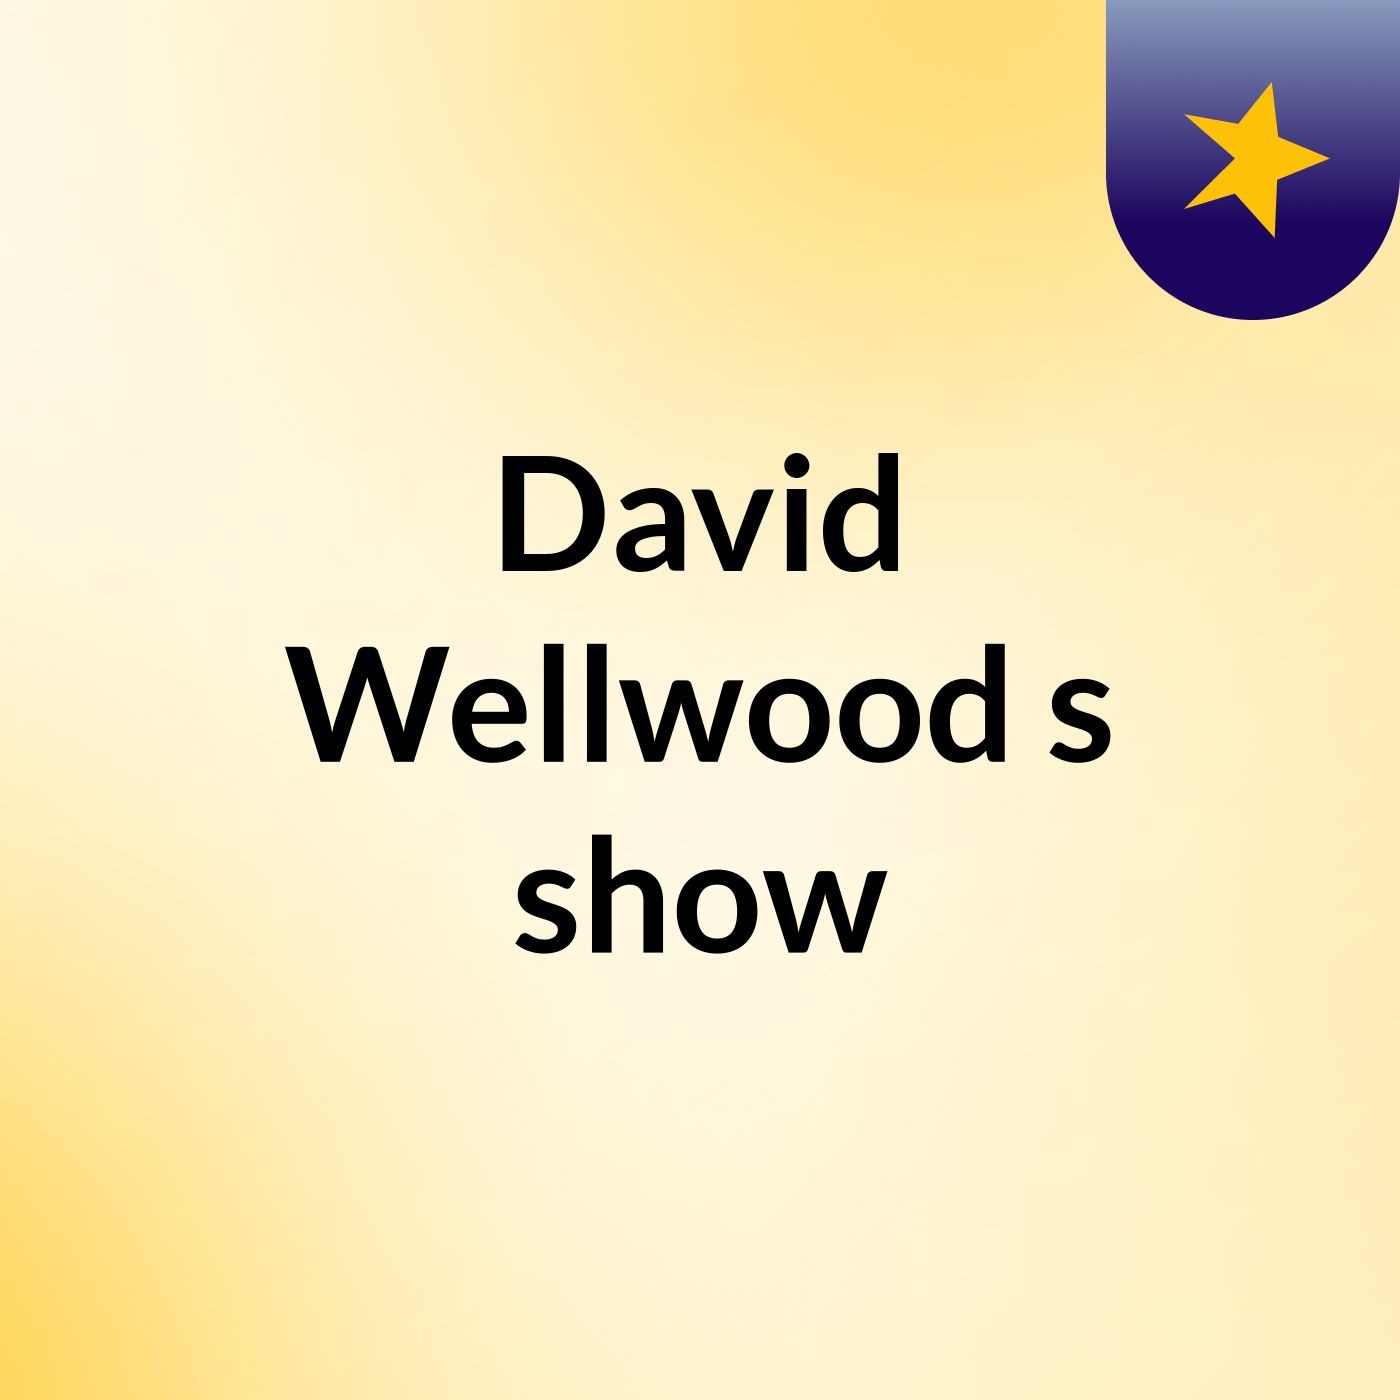 David Wellwood's show